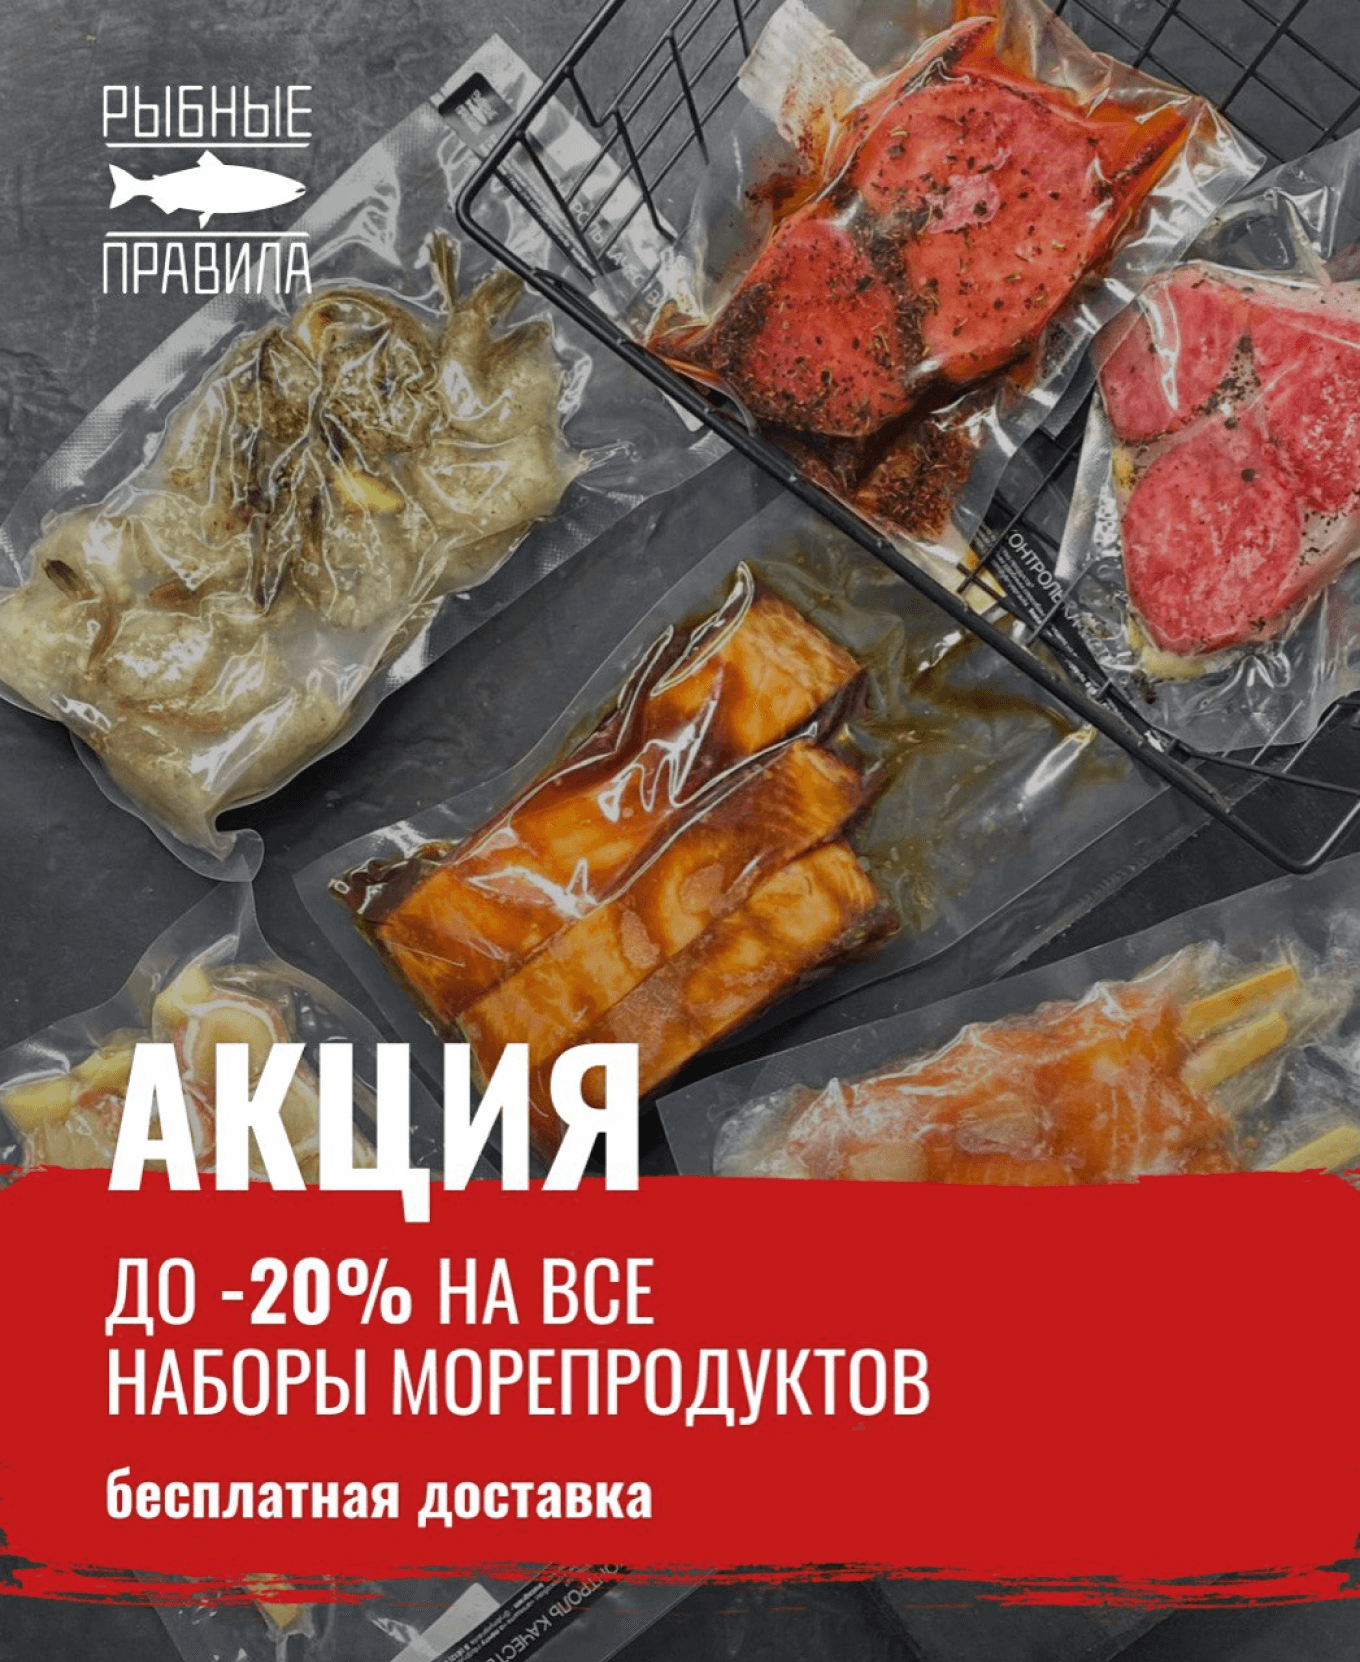 Реклама акции на наборы морепродуктов